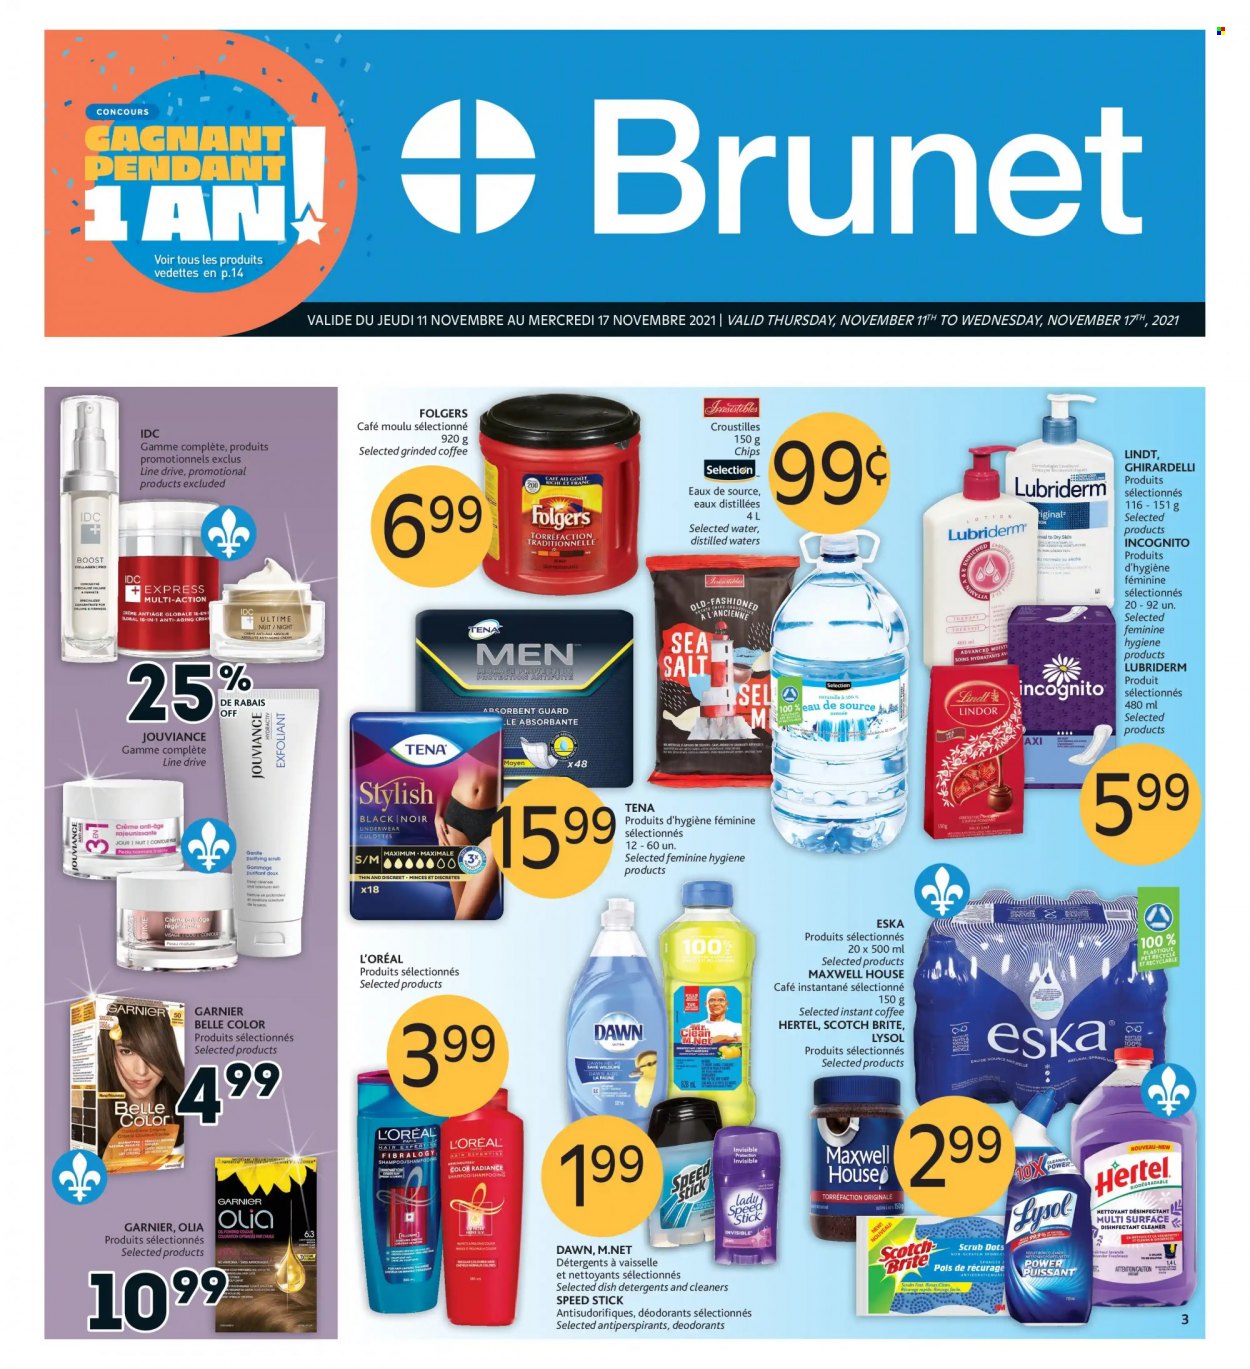 thumbnail - Brunet Flyer - November 11, 2021 - November 17, 2021 - Sales products - cleaner, Lysol, L’Oréal, Lubriderm, Speed Stick, Garnier, shampoo, Lindt, Lindor, desinfection, deodorant. Page 1.